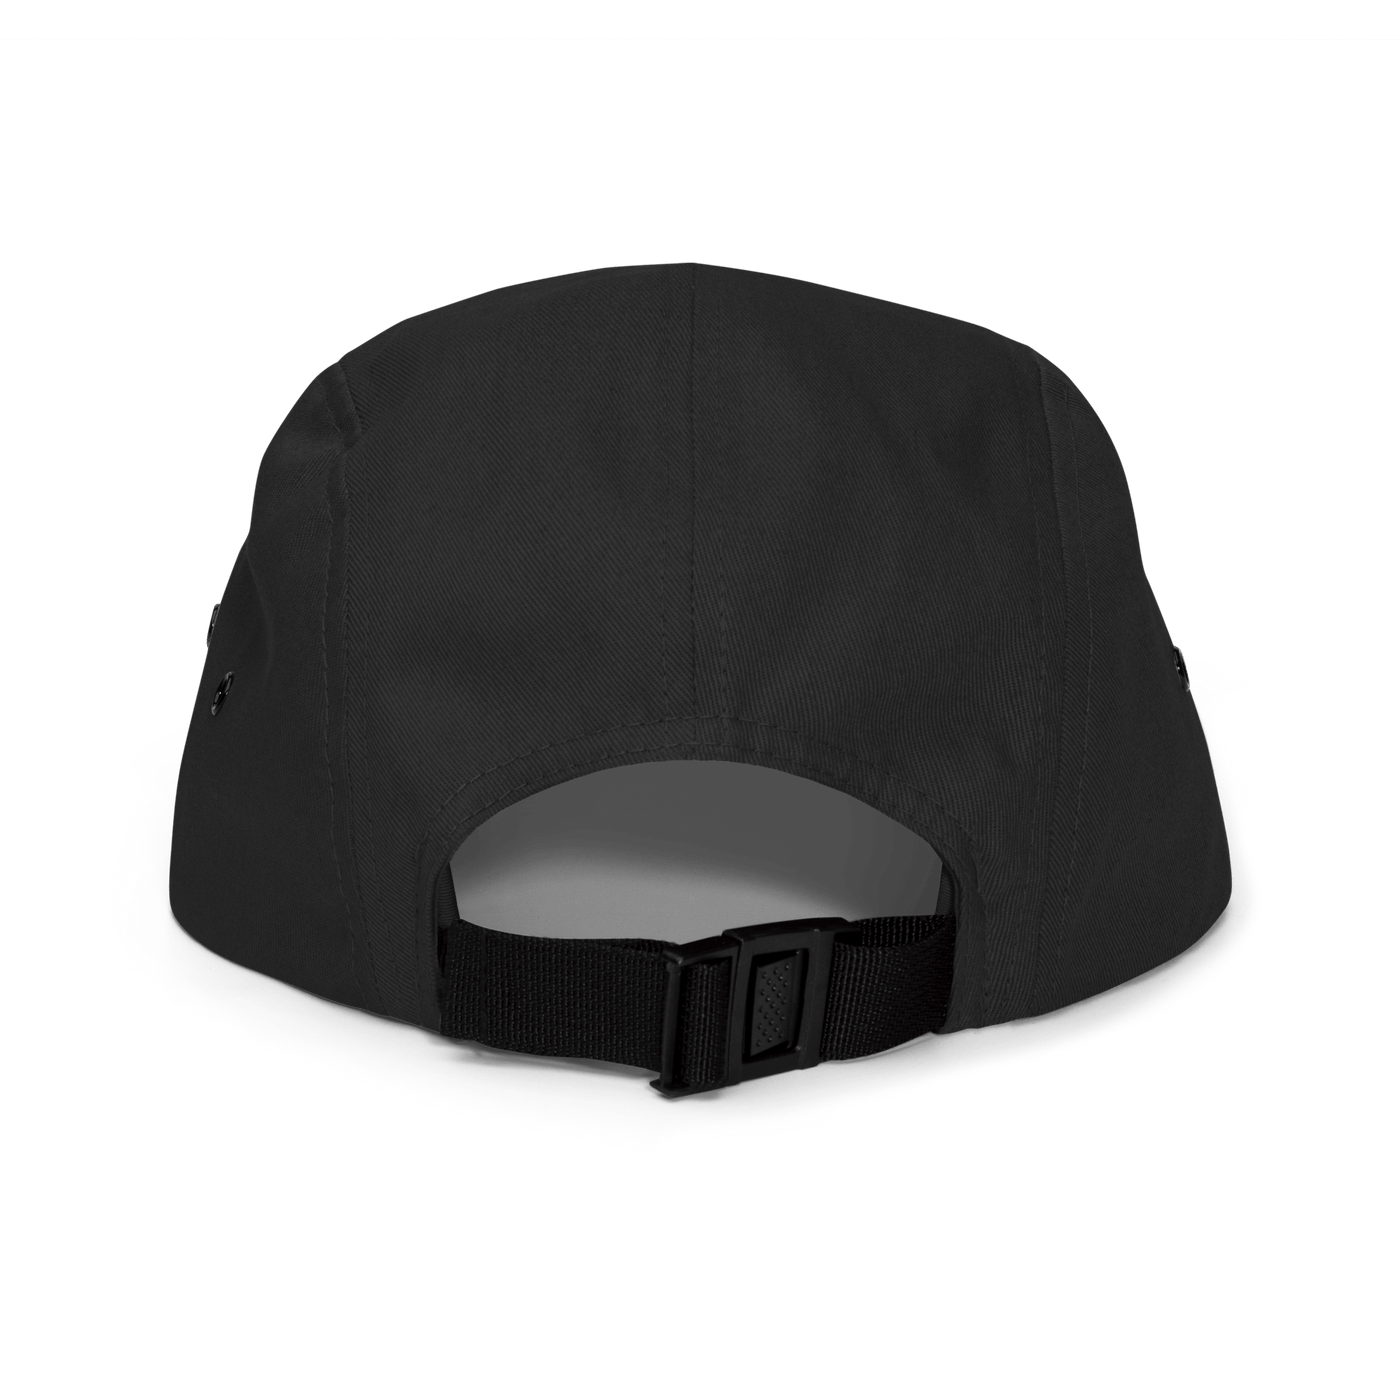 FIKA Five Panel Cap - Black - - Just Another Cap Store